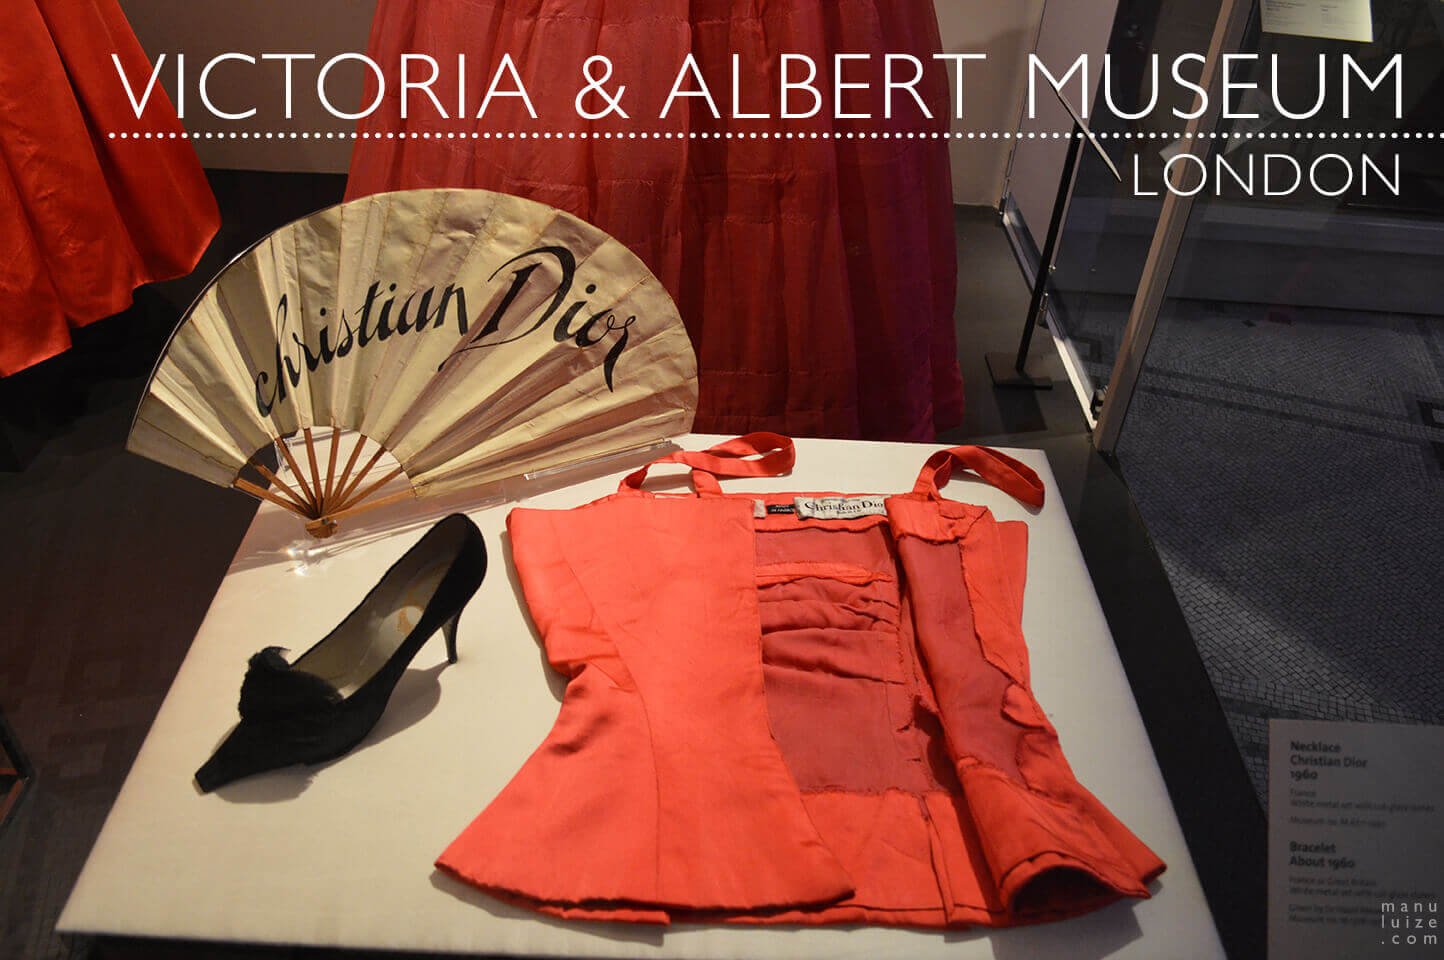 Christian Dior no Victoria & Albert Museum London